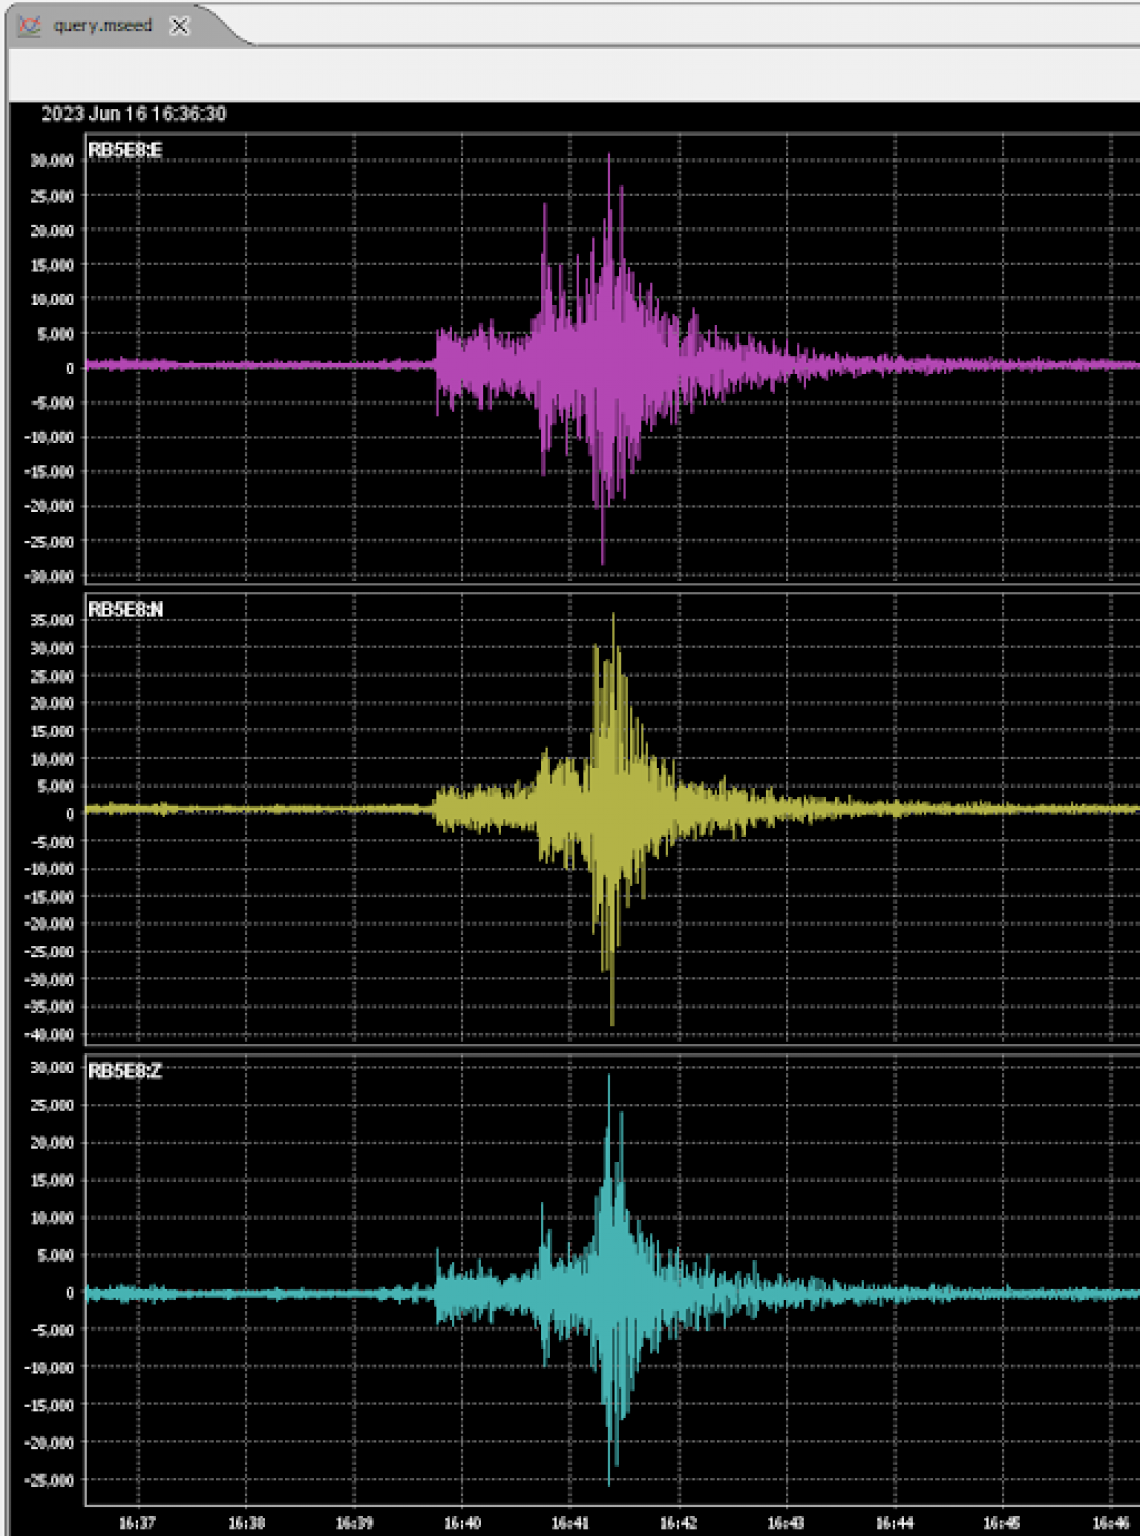 Earthquake seismic waveforms